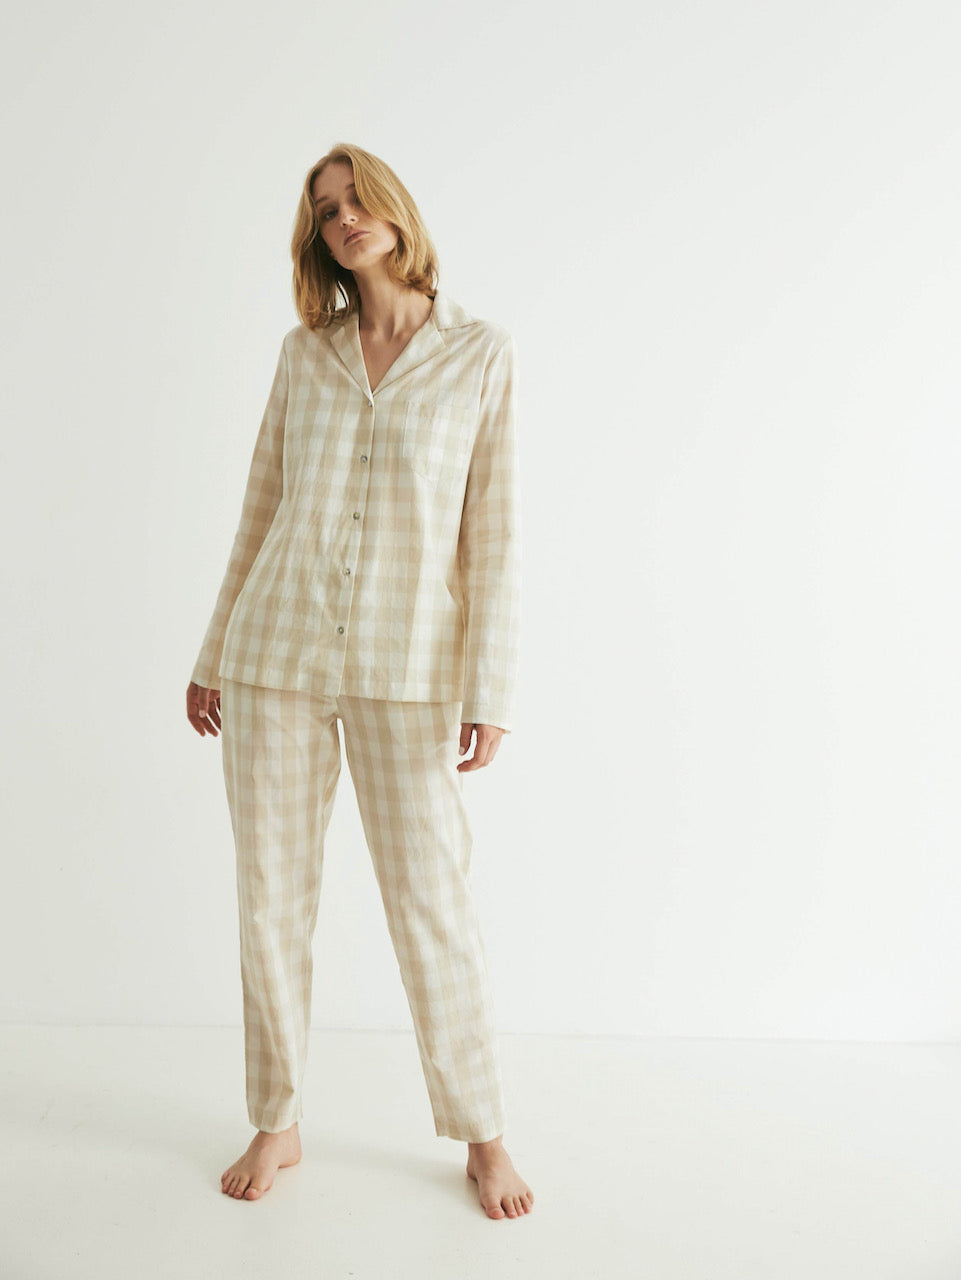 A woman wearing a beige plaid pyjama set.
Product: Classic Set - Oatmeal Gingham
Brand: general sleep